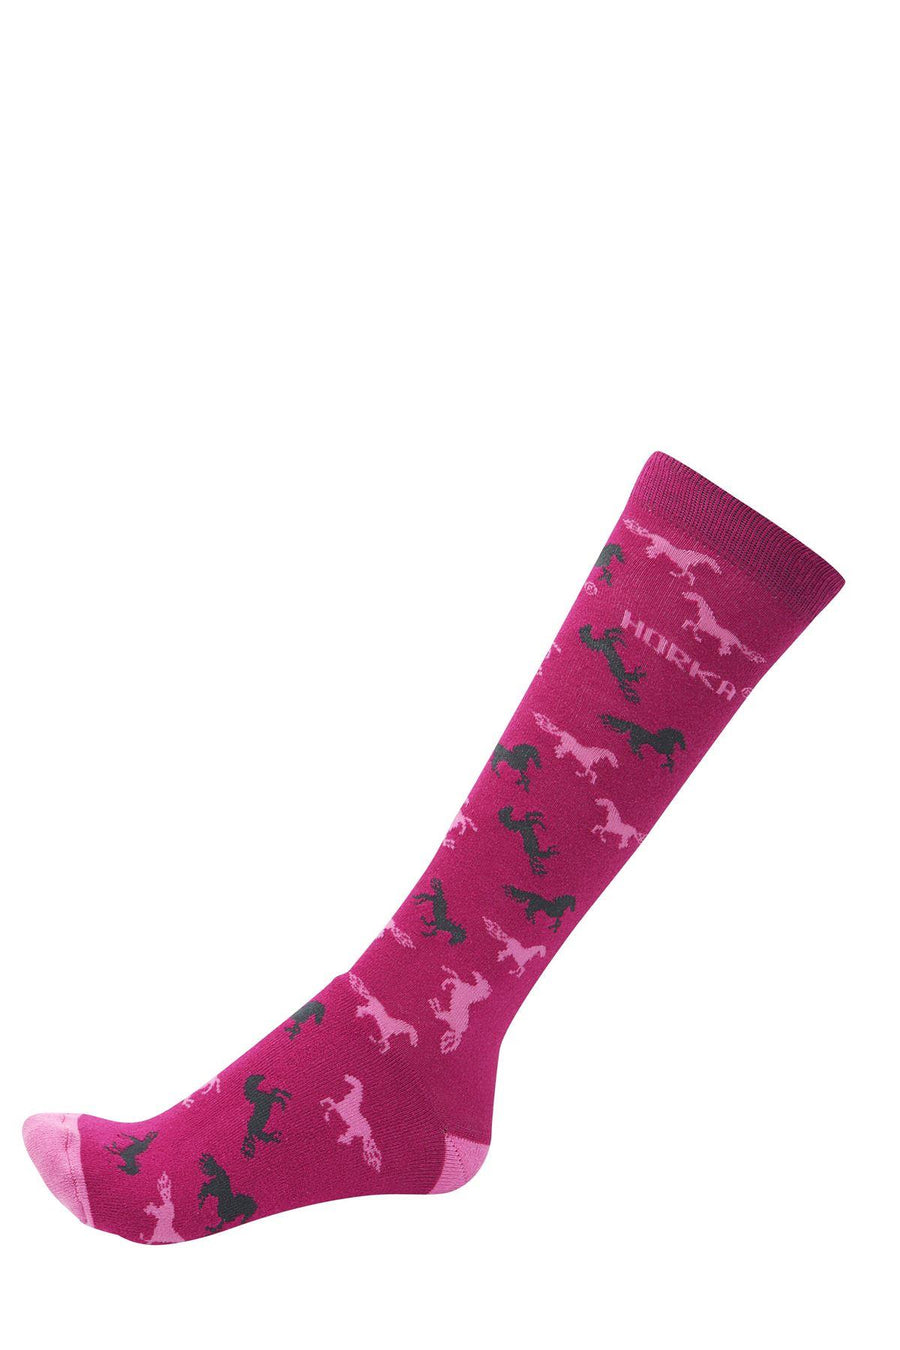 Horka Socks Horses Pink